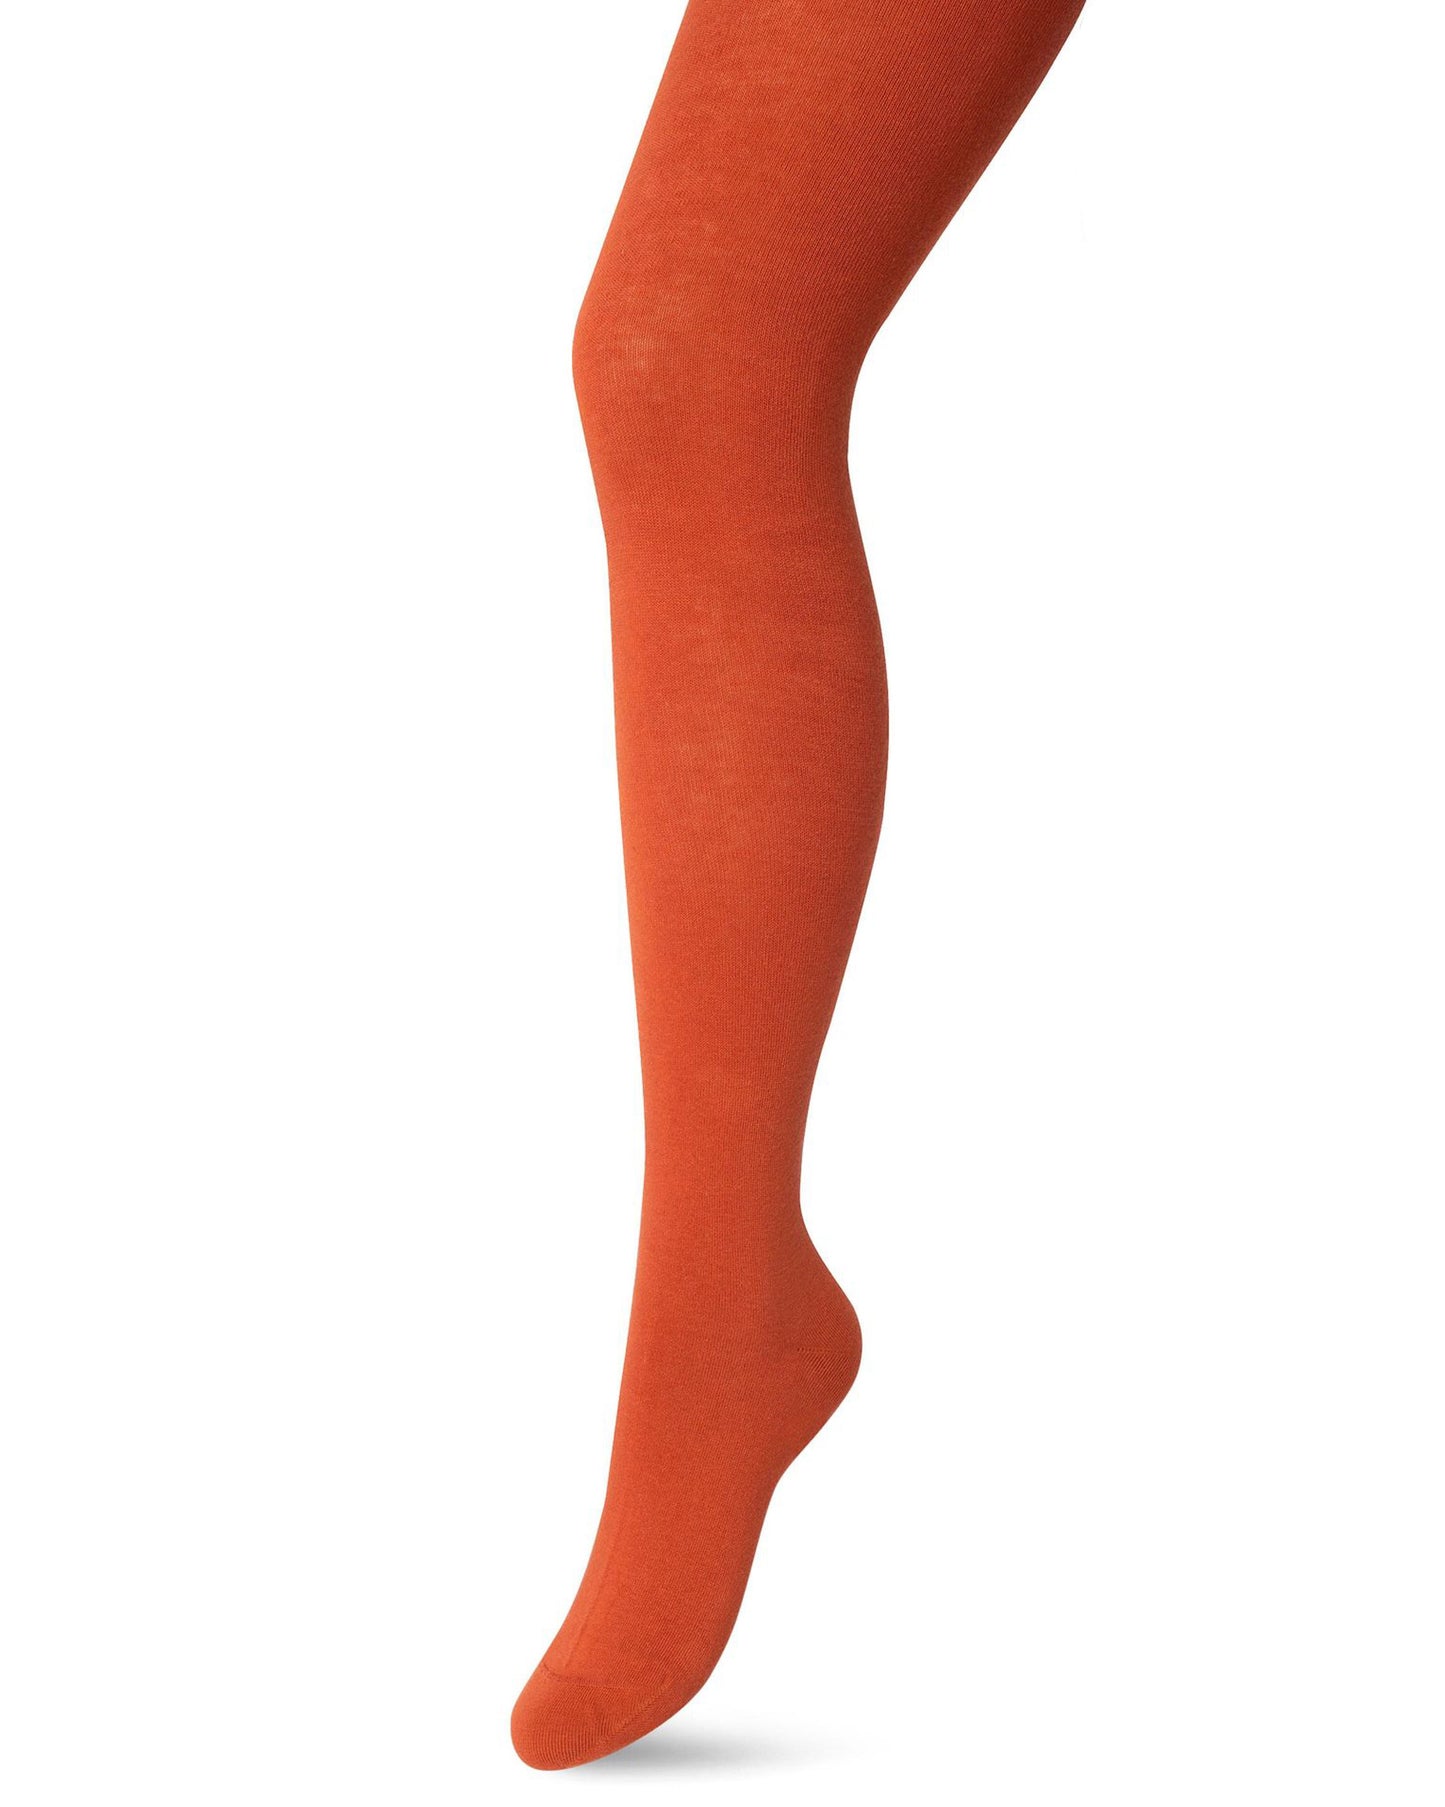 Bonnie Doon Bio Cotton Tights - Rusty orange (henna) Warm and soft knitted organic cotton Winter thermal tights.